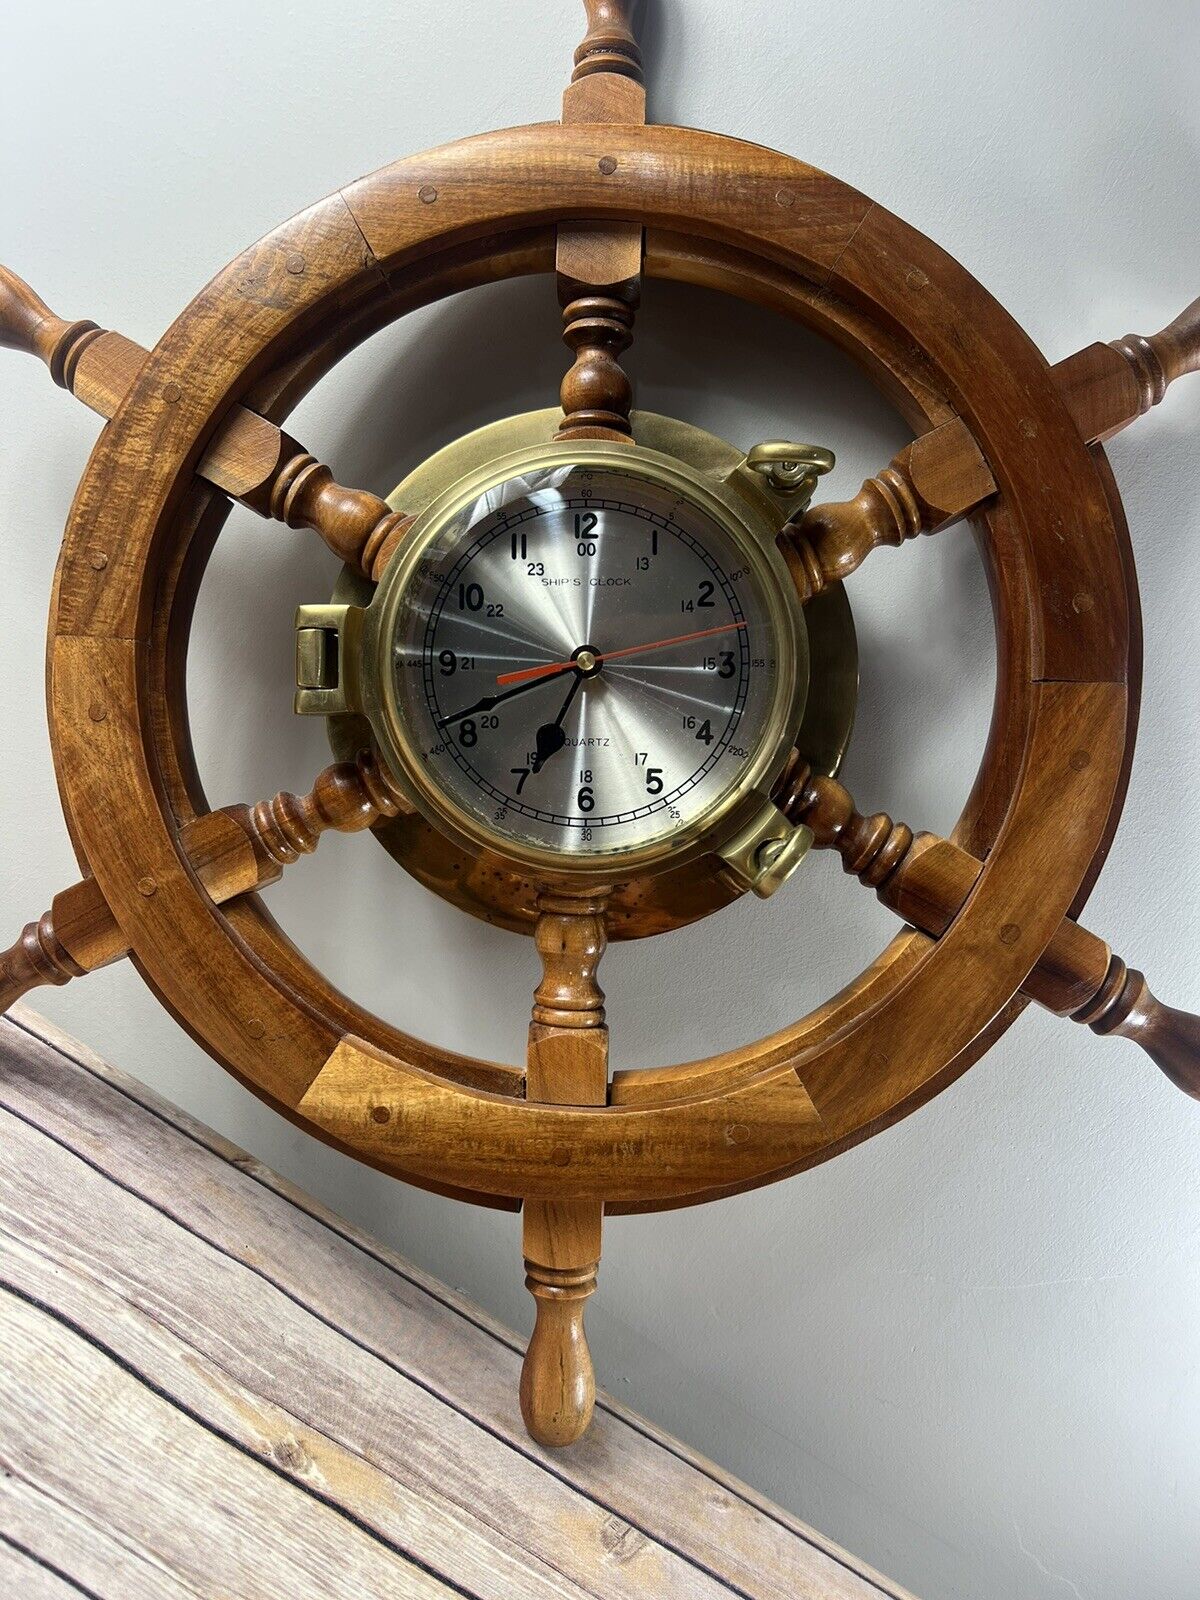 Wooden Pirate Ship Helm Quartz Wall Clock Restaurant Decor Vintage